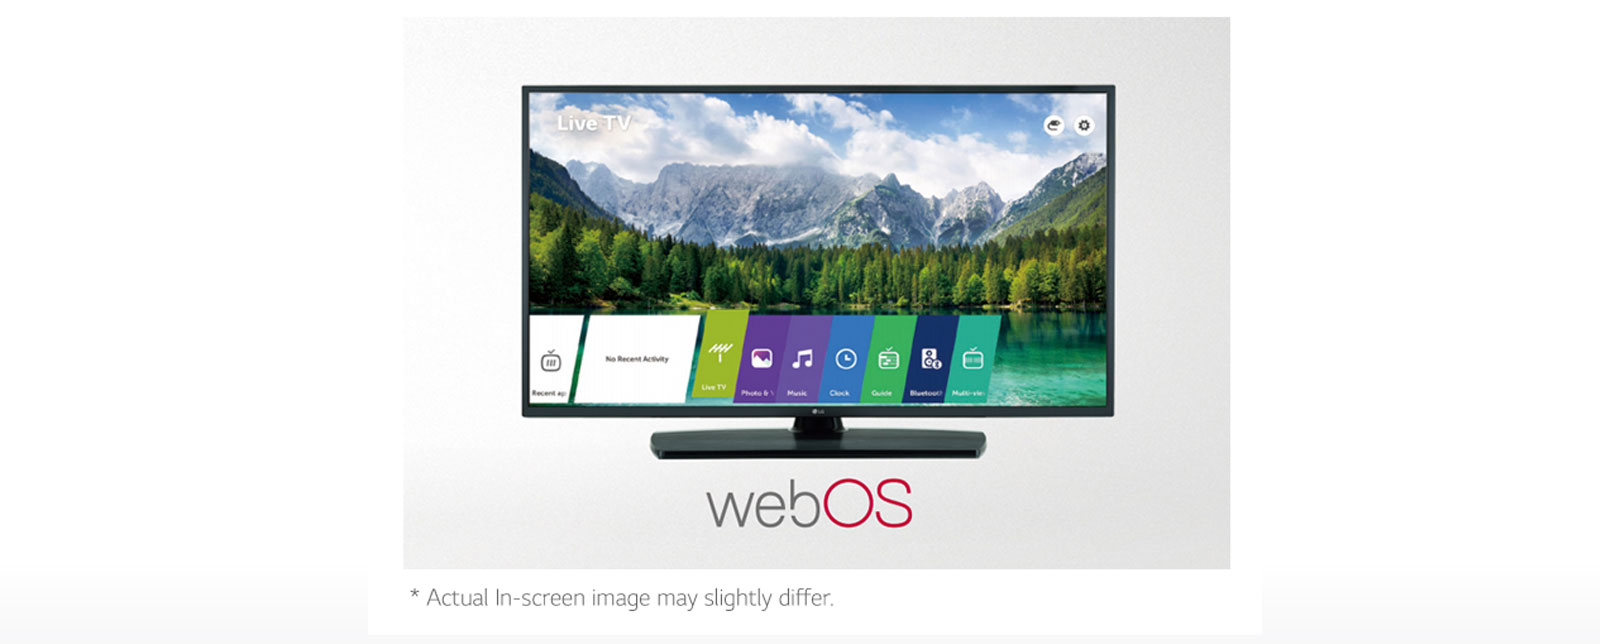 سیستم عامل پیشرفته 4.5 webOS تلویزیون ال جی 49UT661H